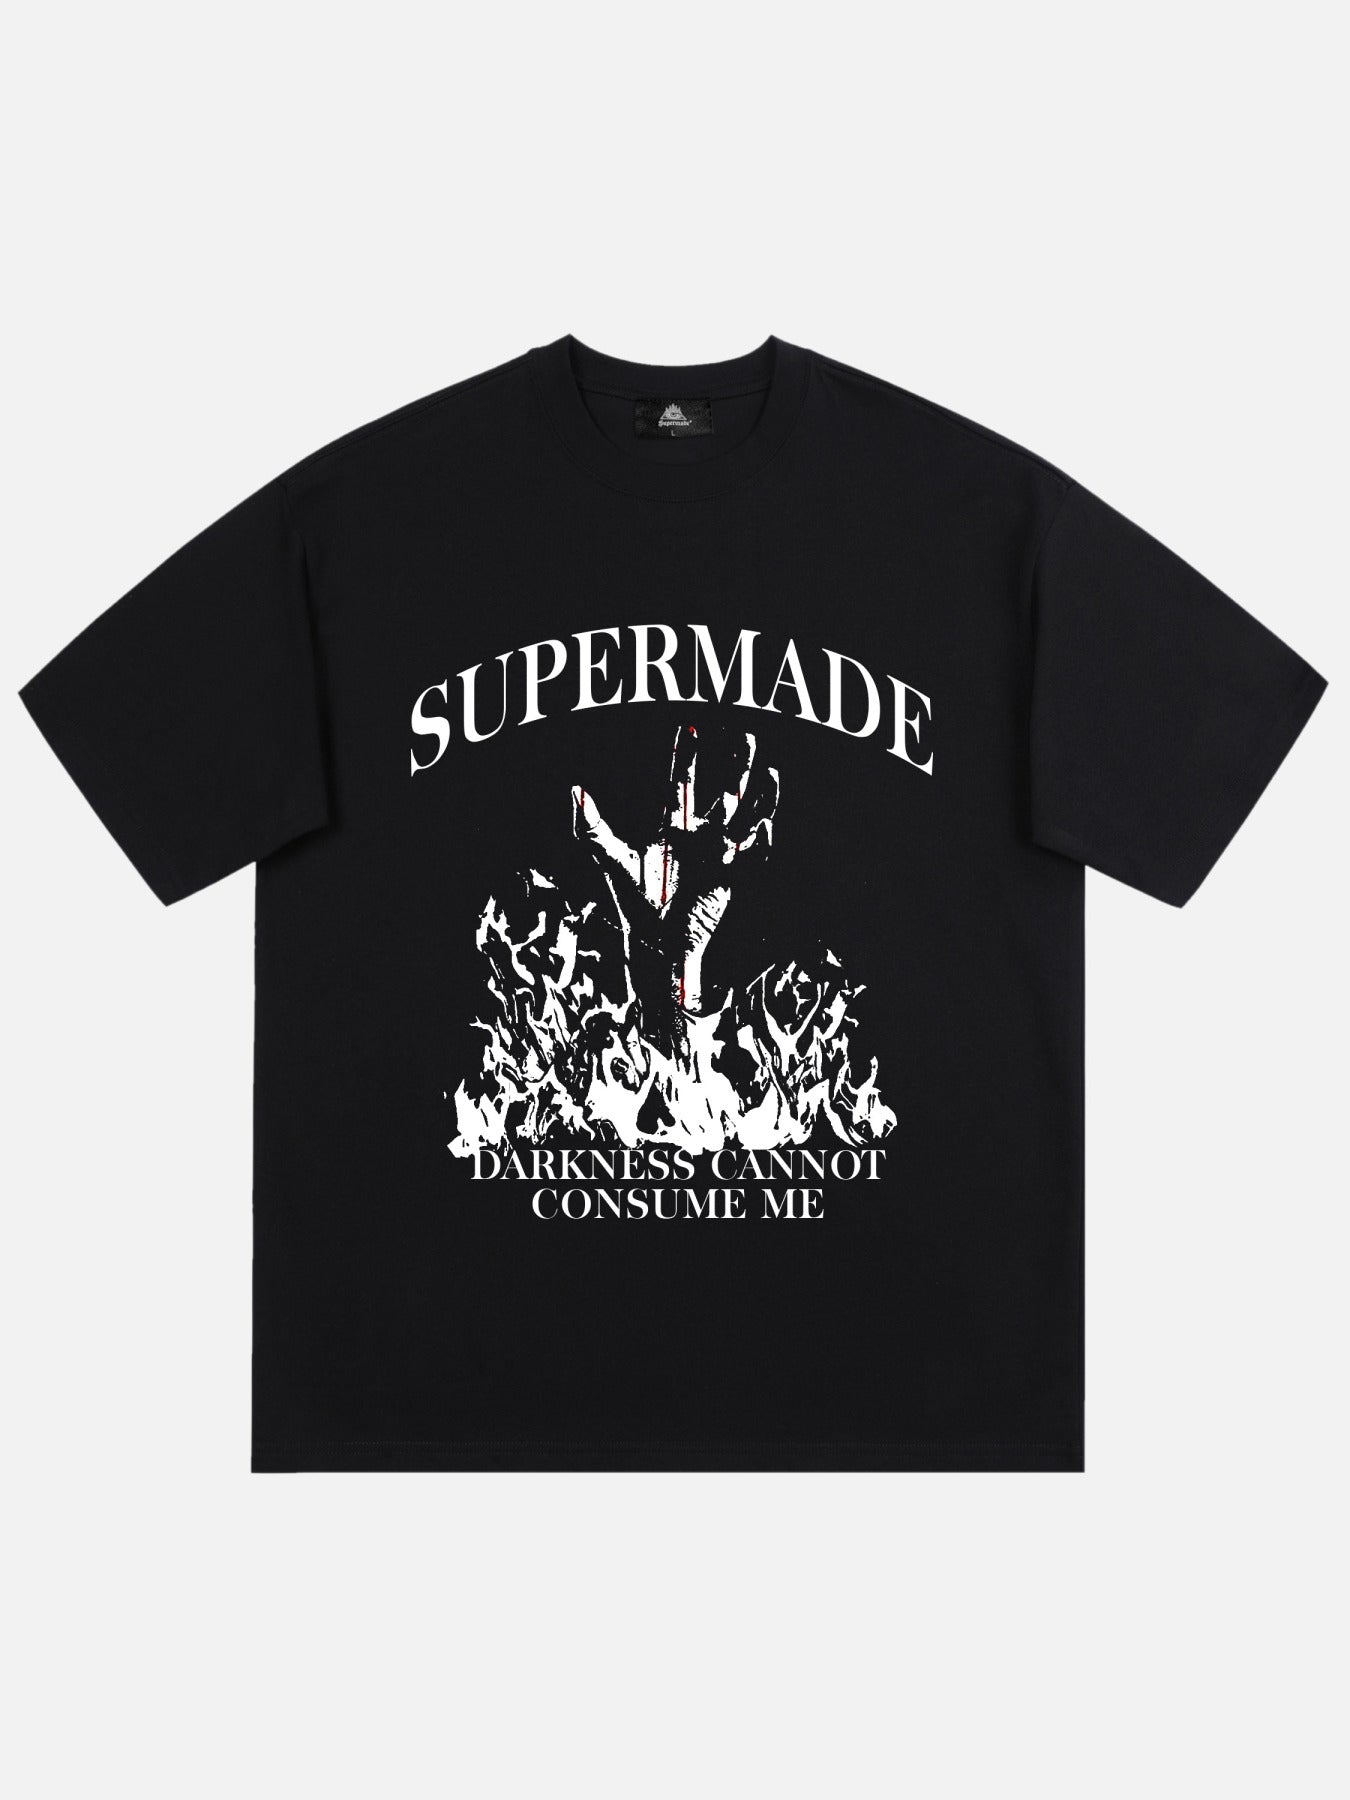 The Supermade Dark Print T-shirt